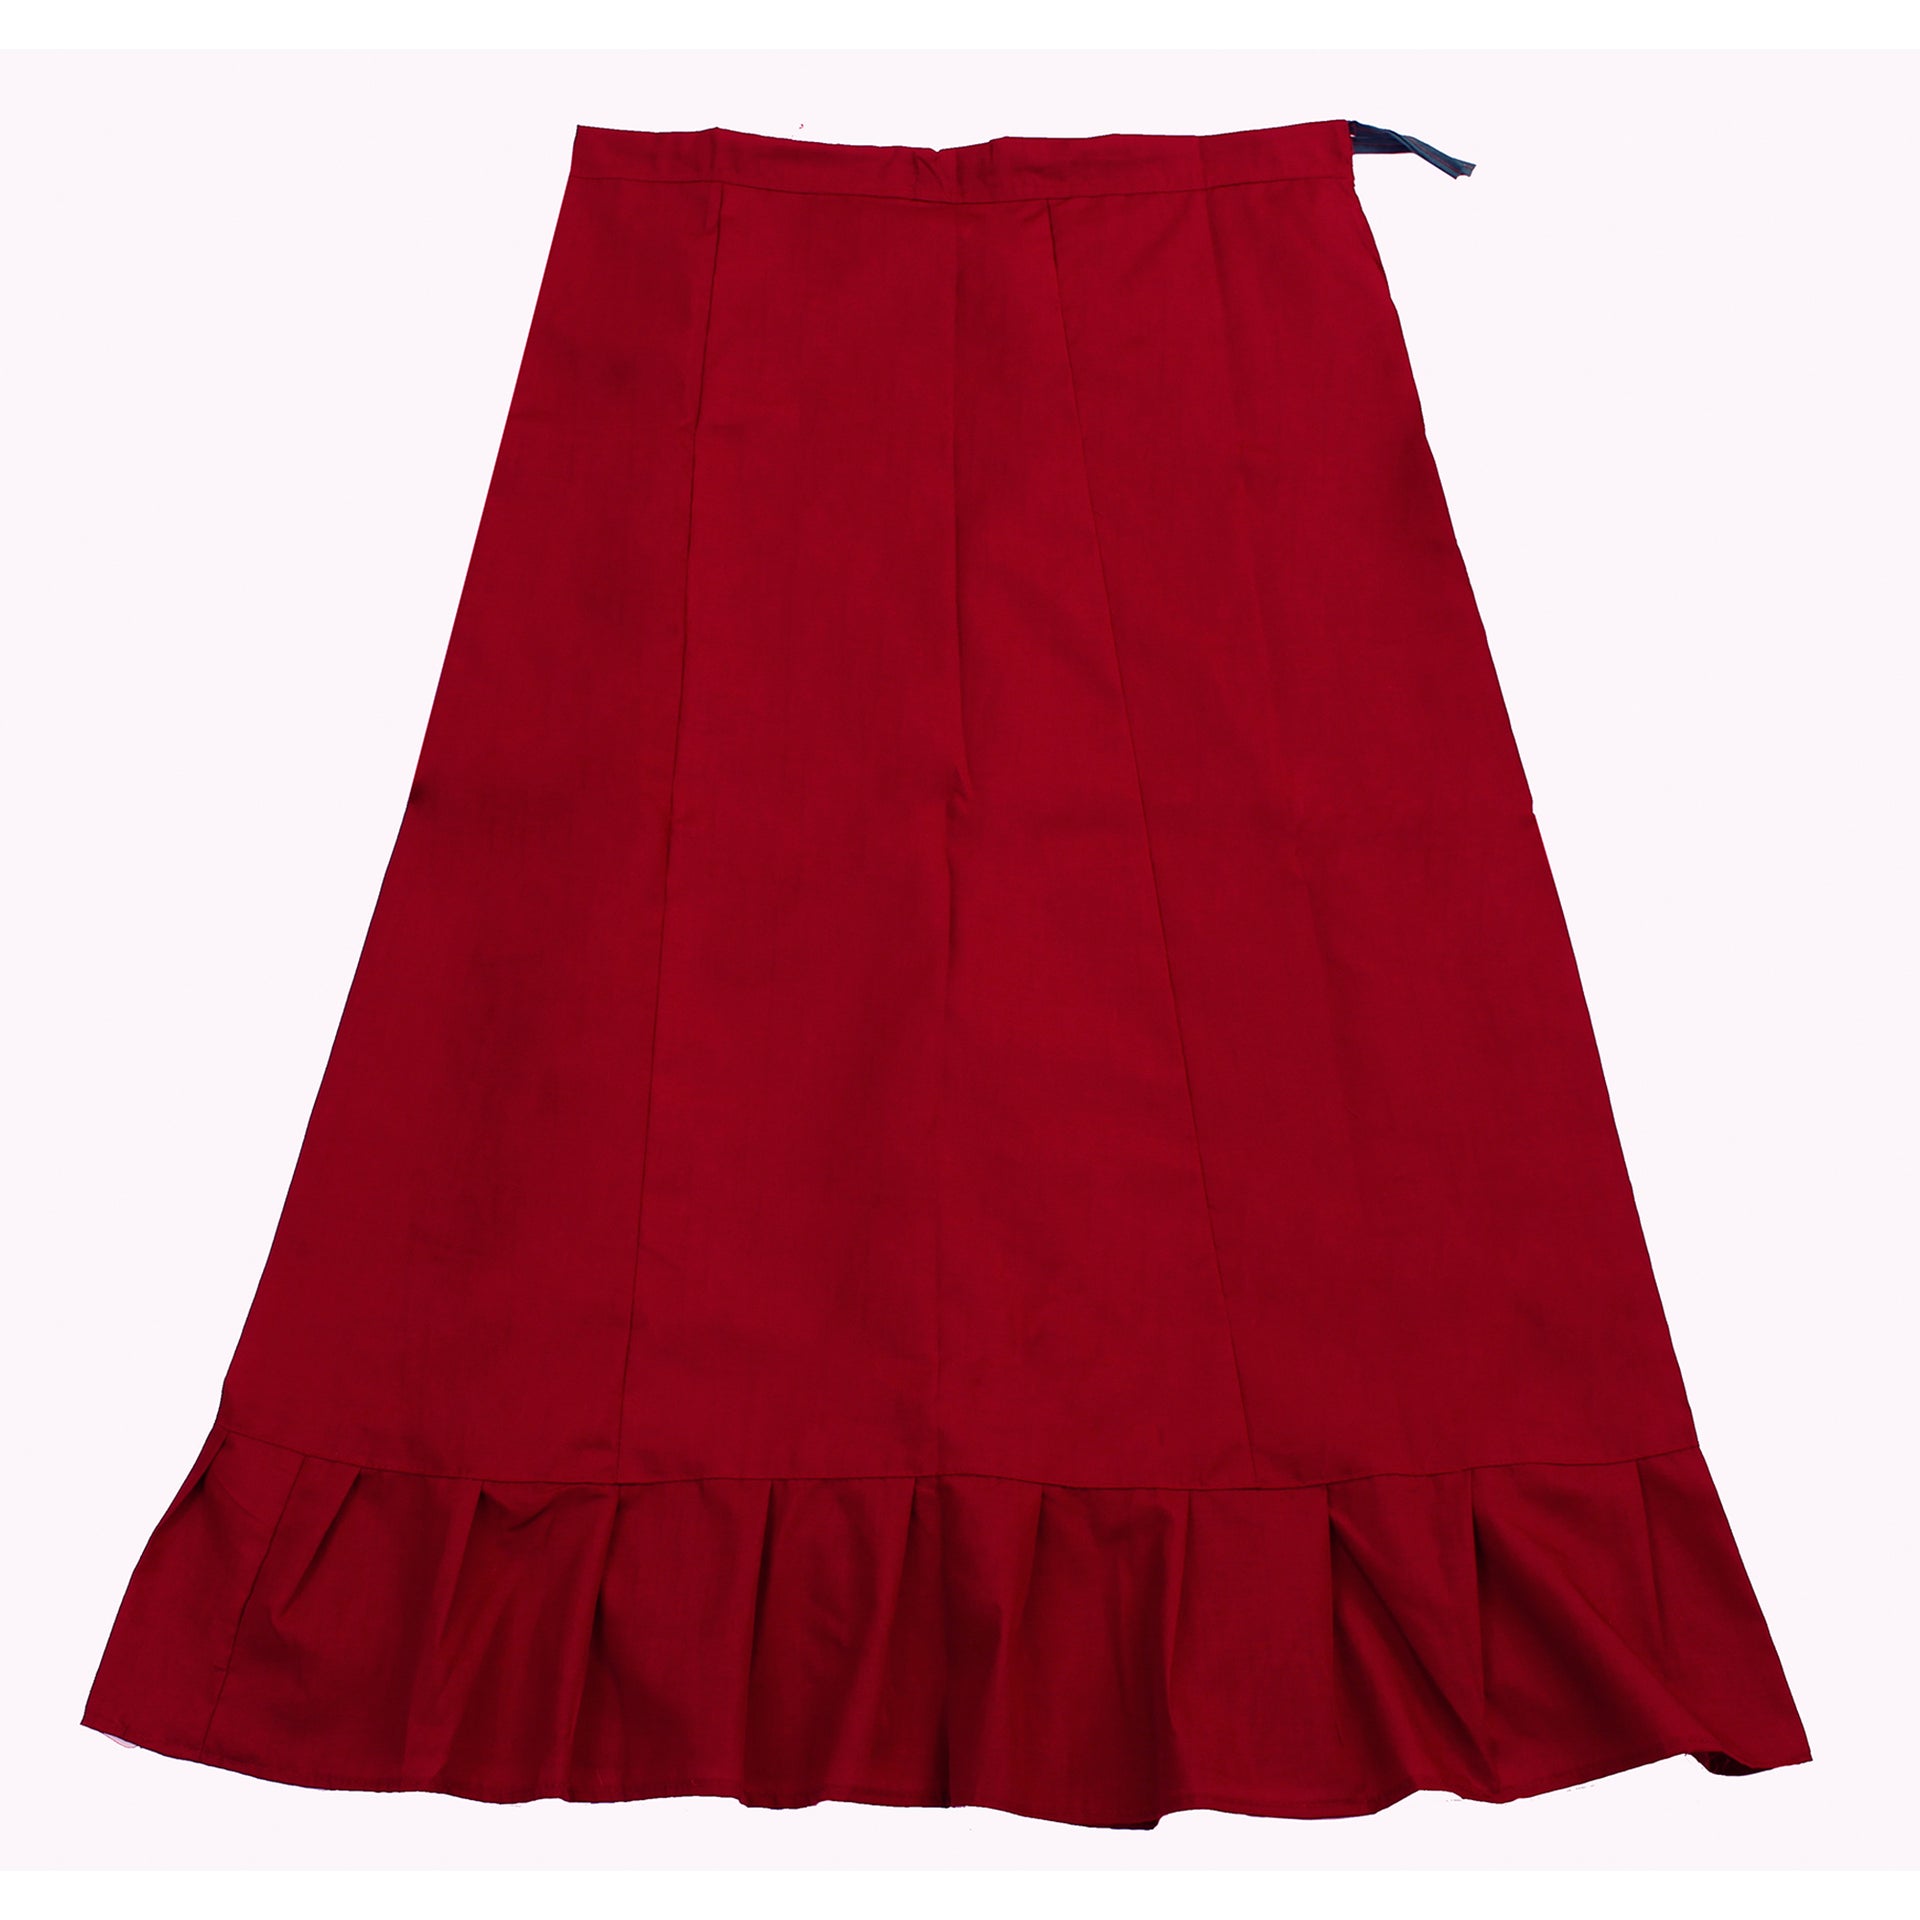 Wine - Sari (Saree) Petticoat - Available in S, M, L & XL - Underskirt